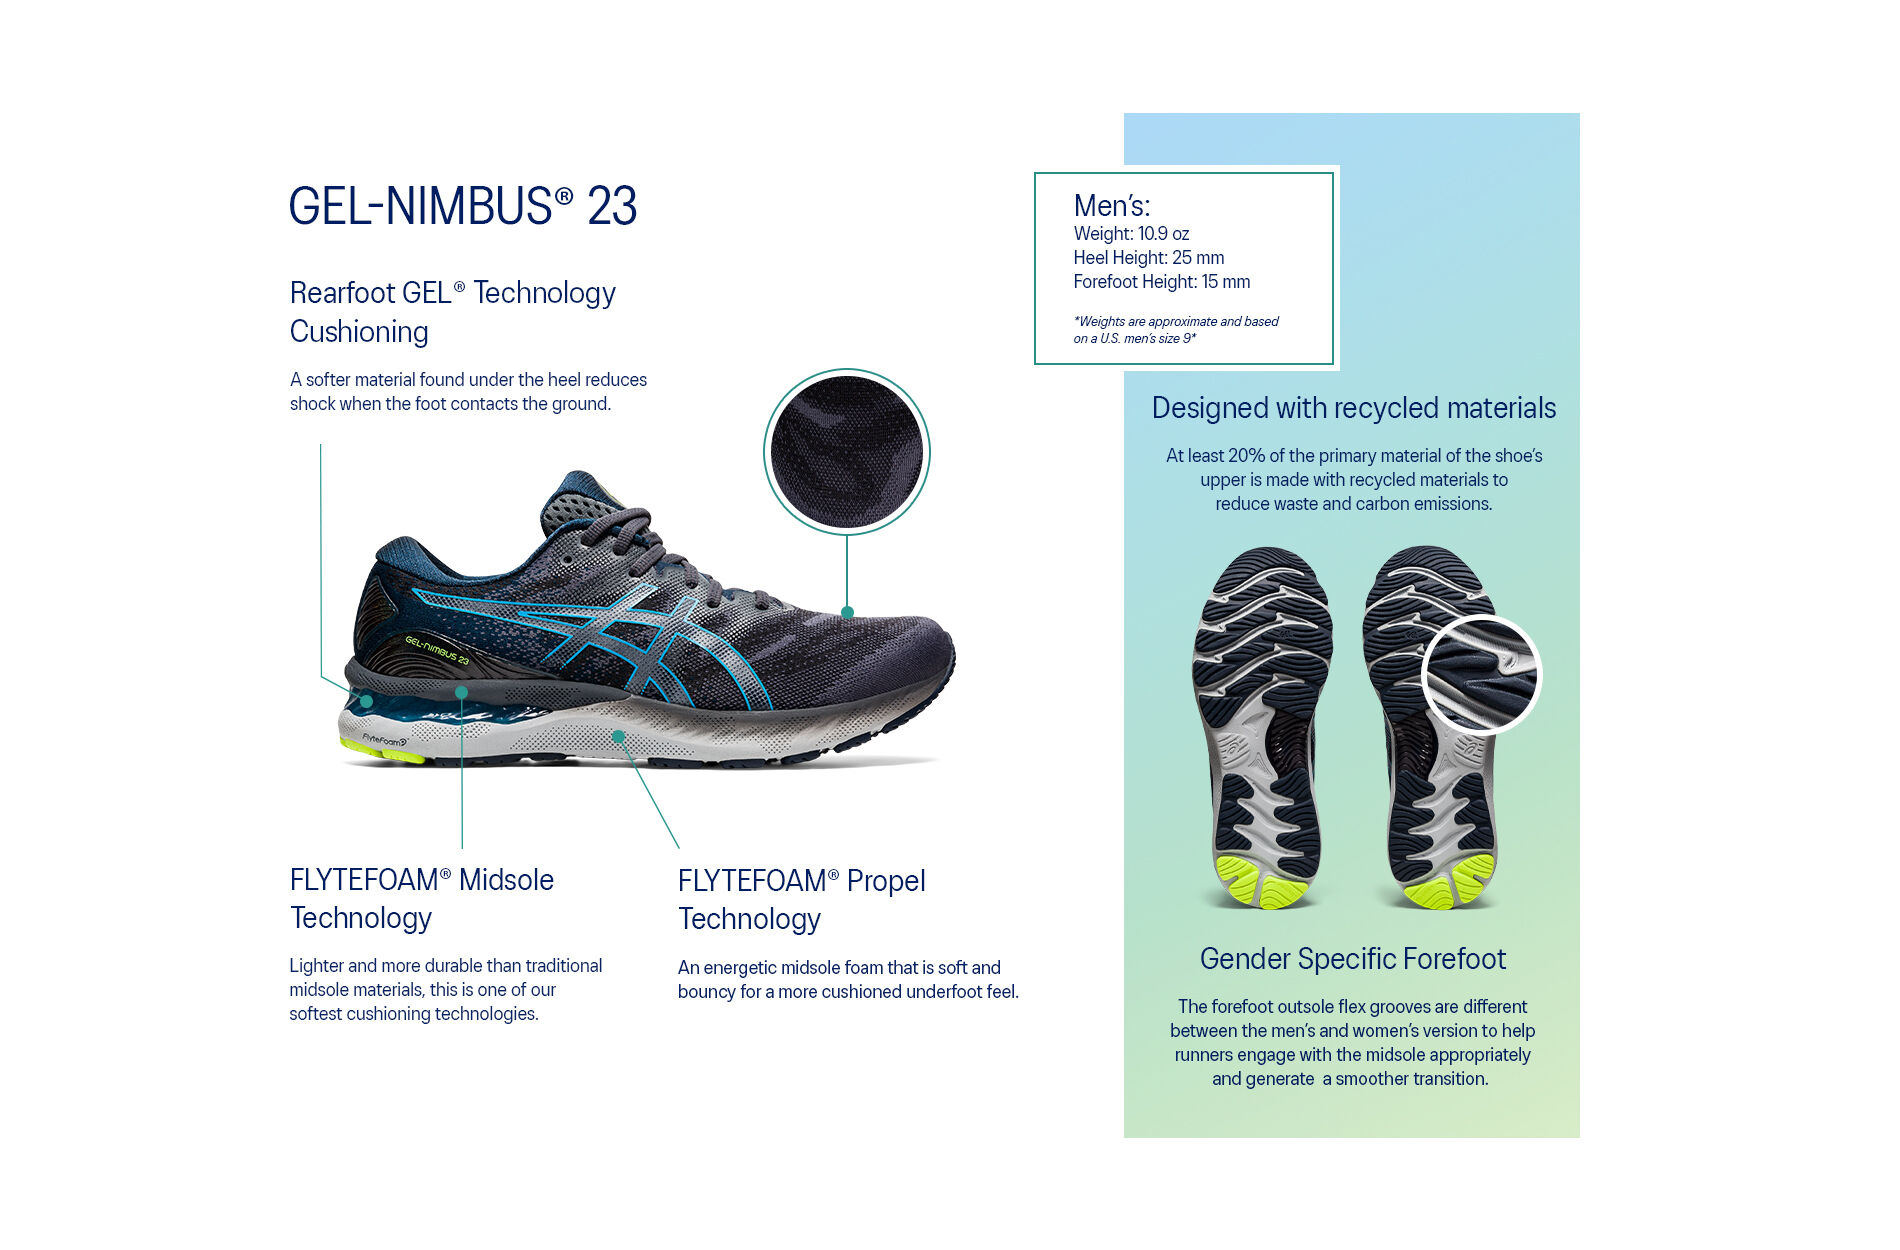 Men's GEL-NIMBUS 23 | Monaco Blue/Bright Lime | Running Shoes | ASICS